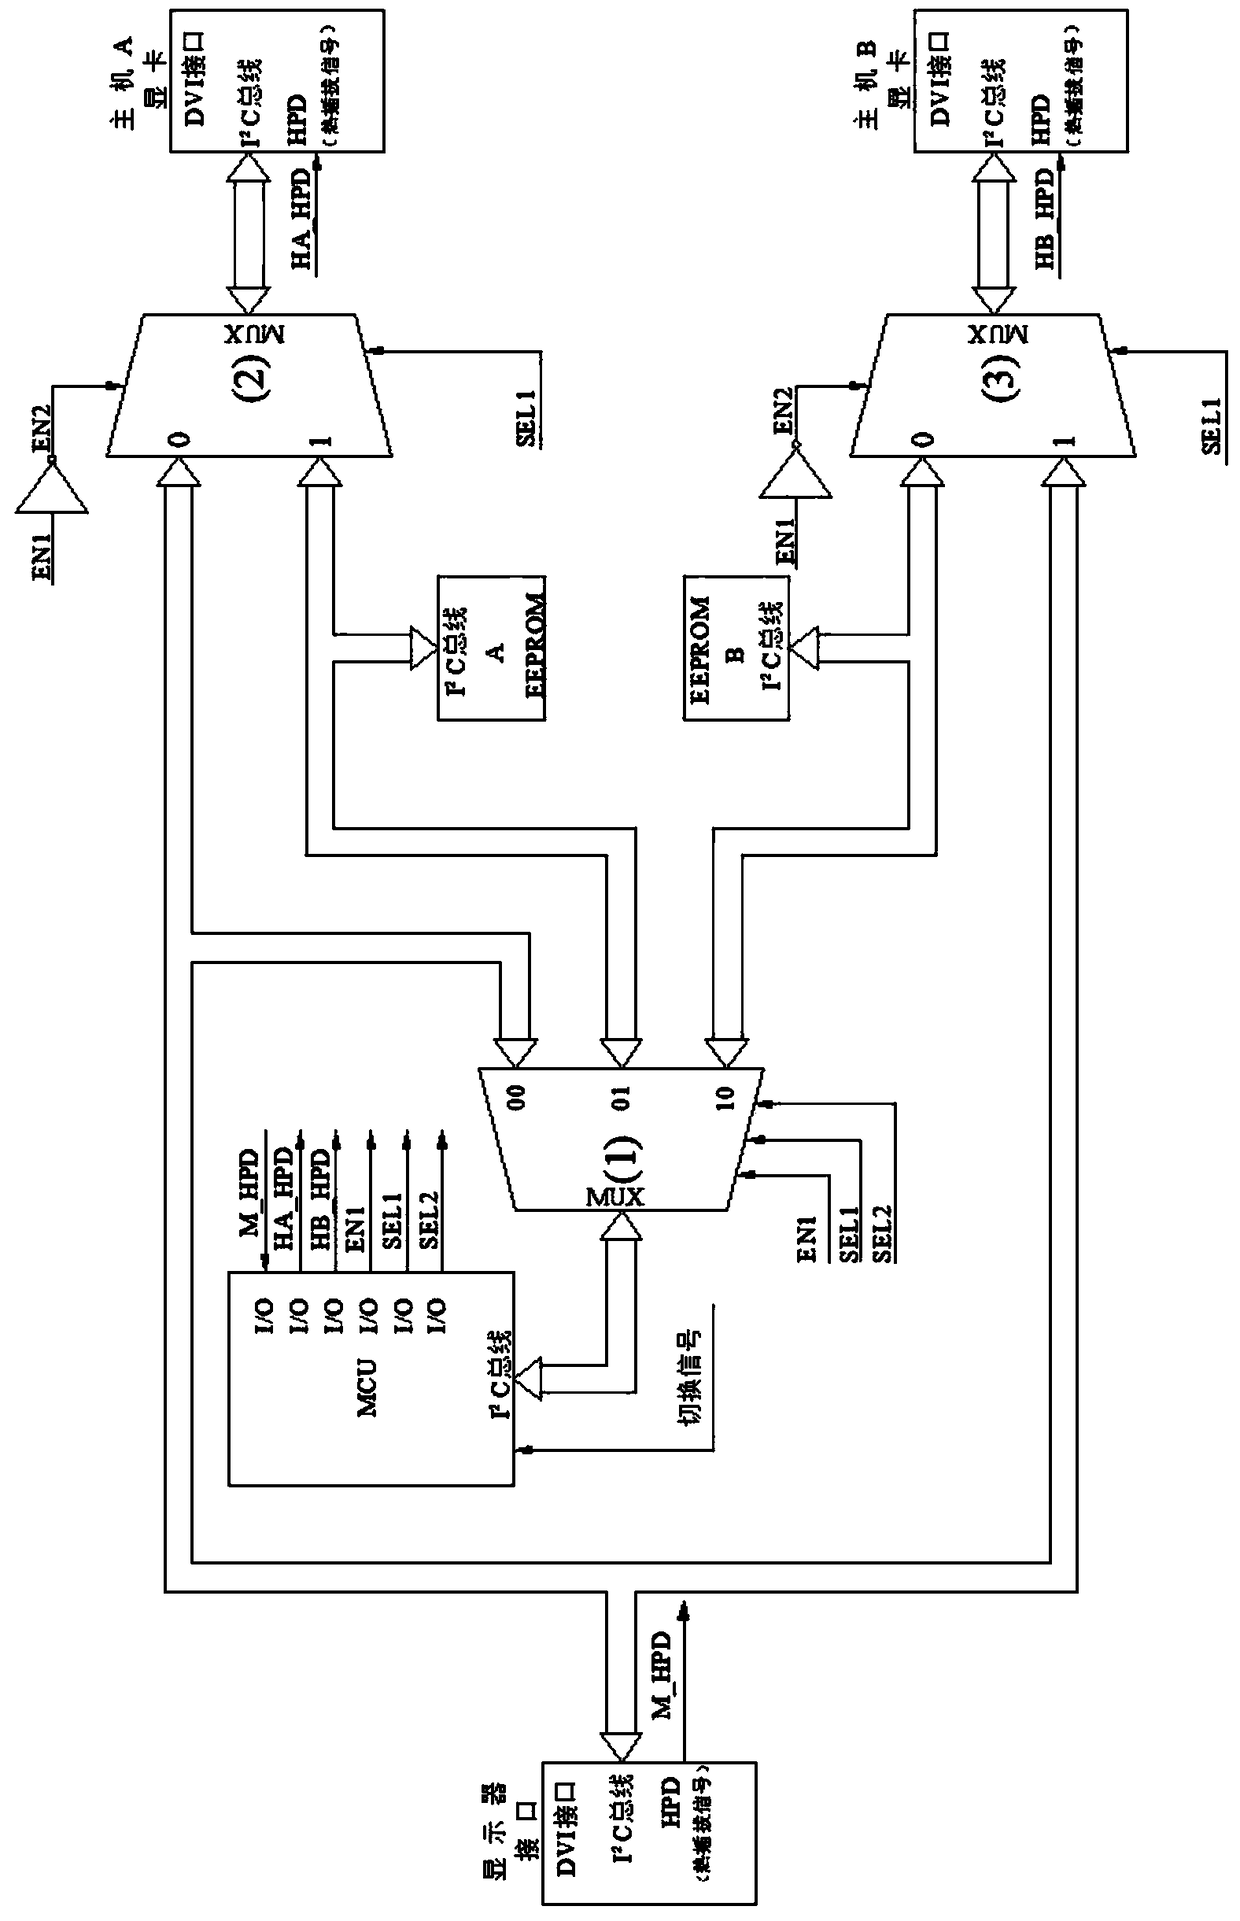 Double -machine KVM shared digital display circuit